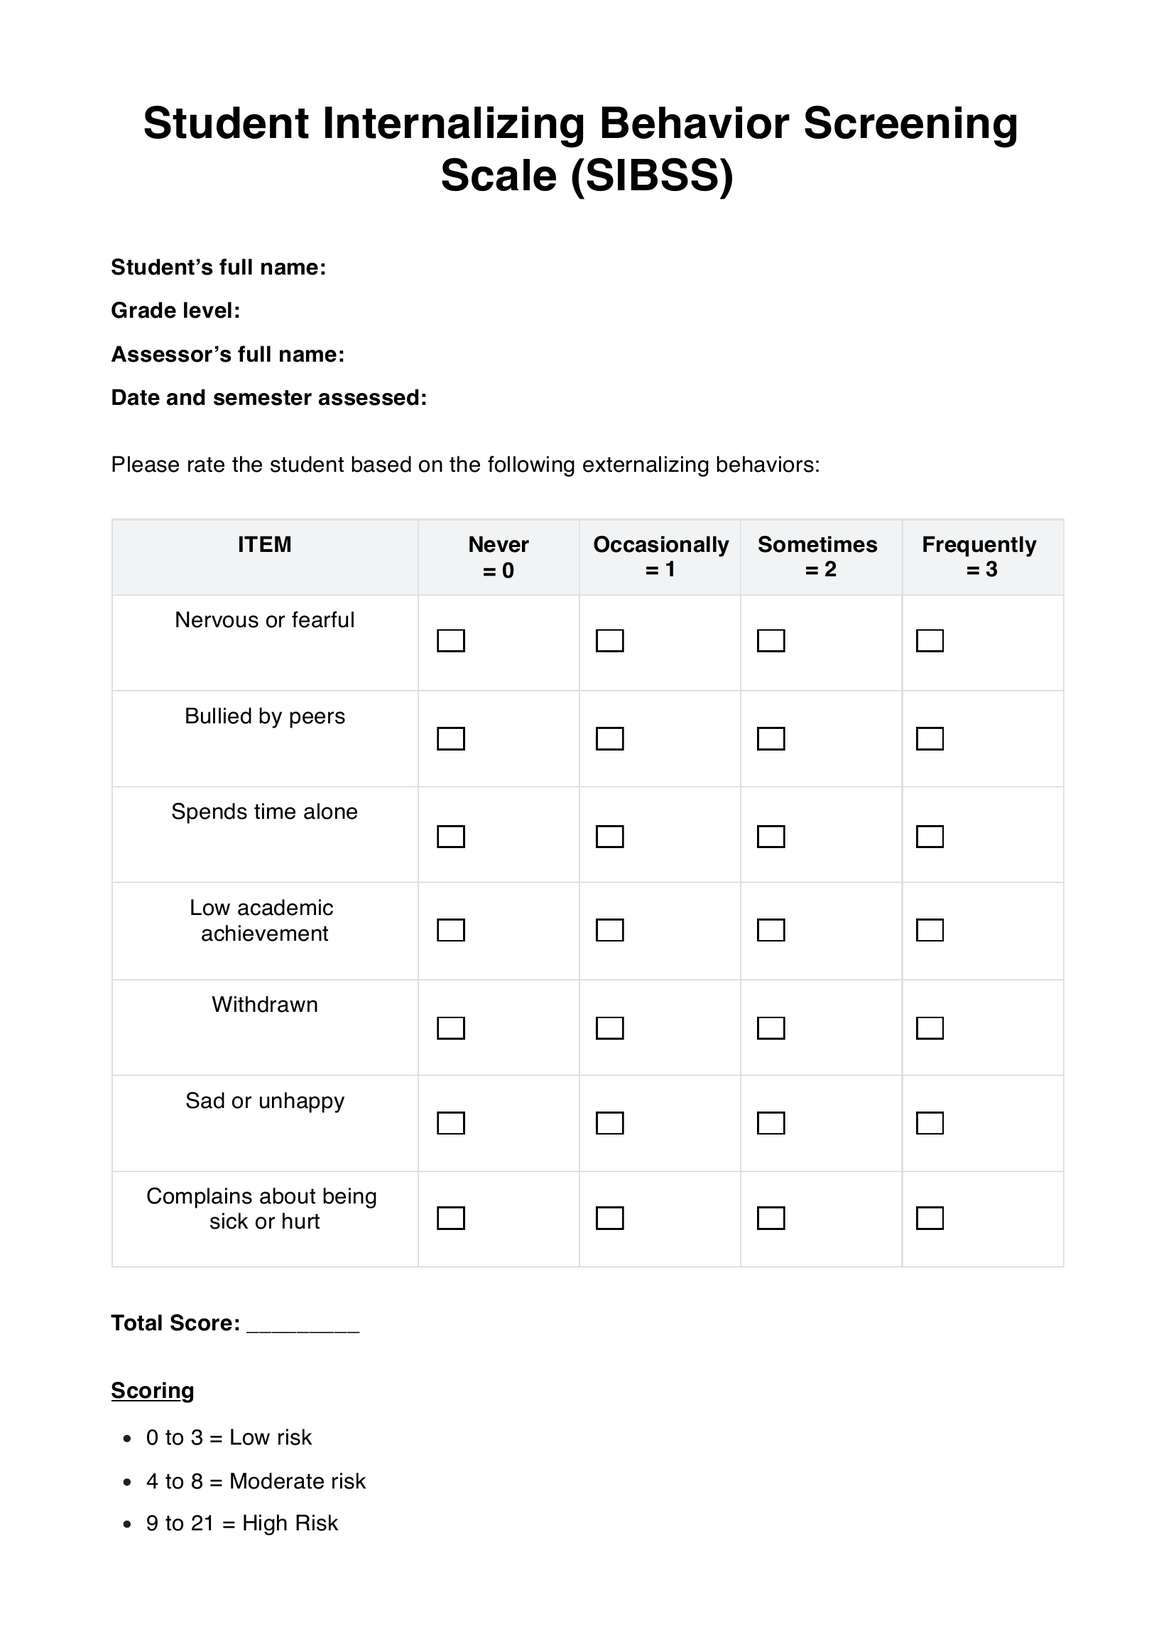 Student Internalizing Behavior Screening Scale (SIBSS) PDF Example